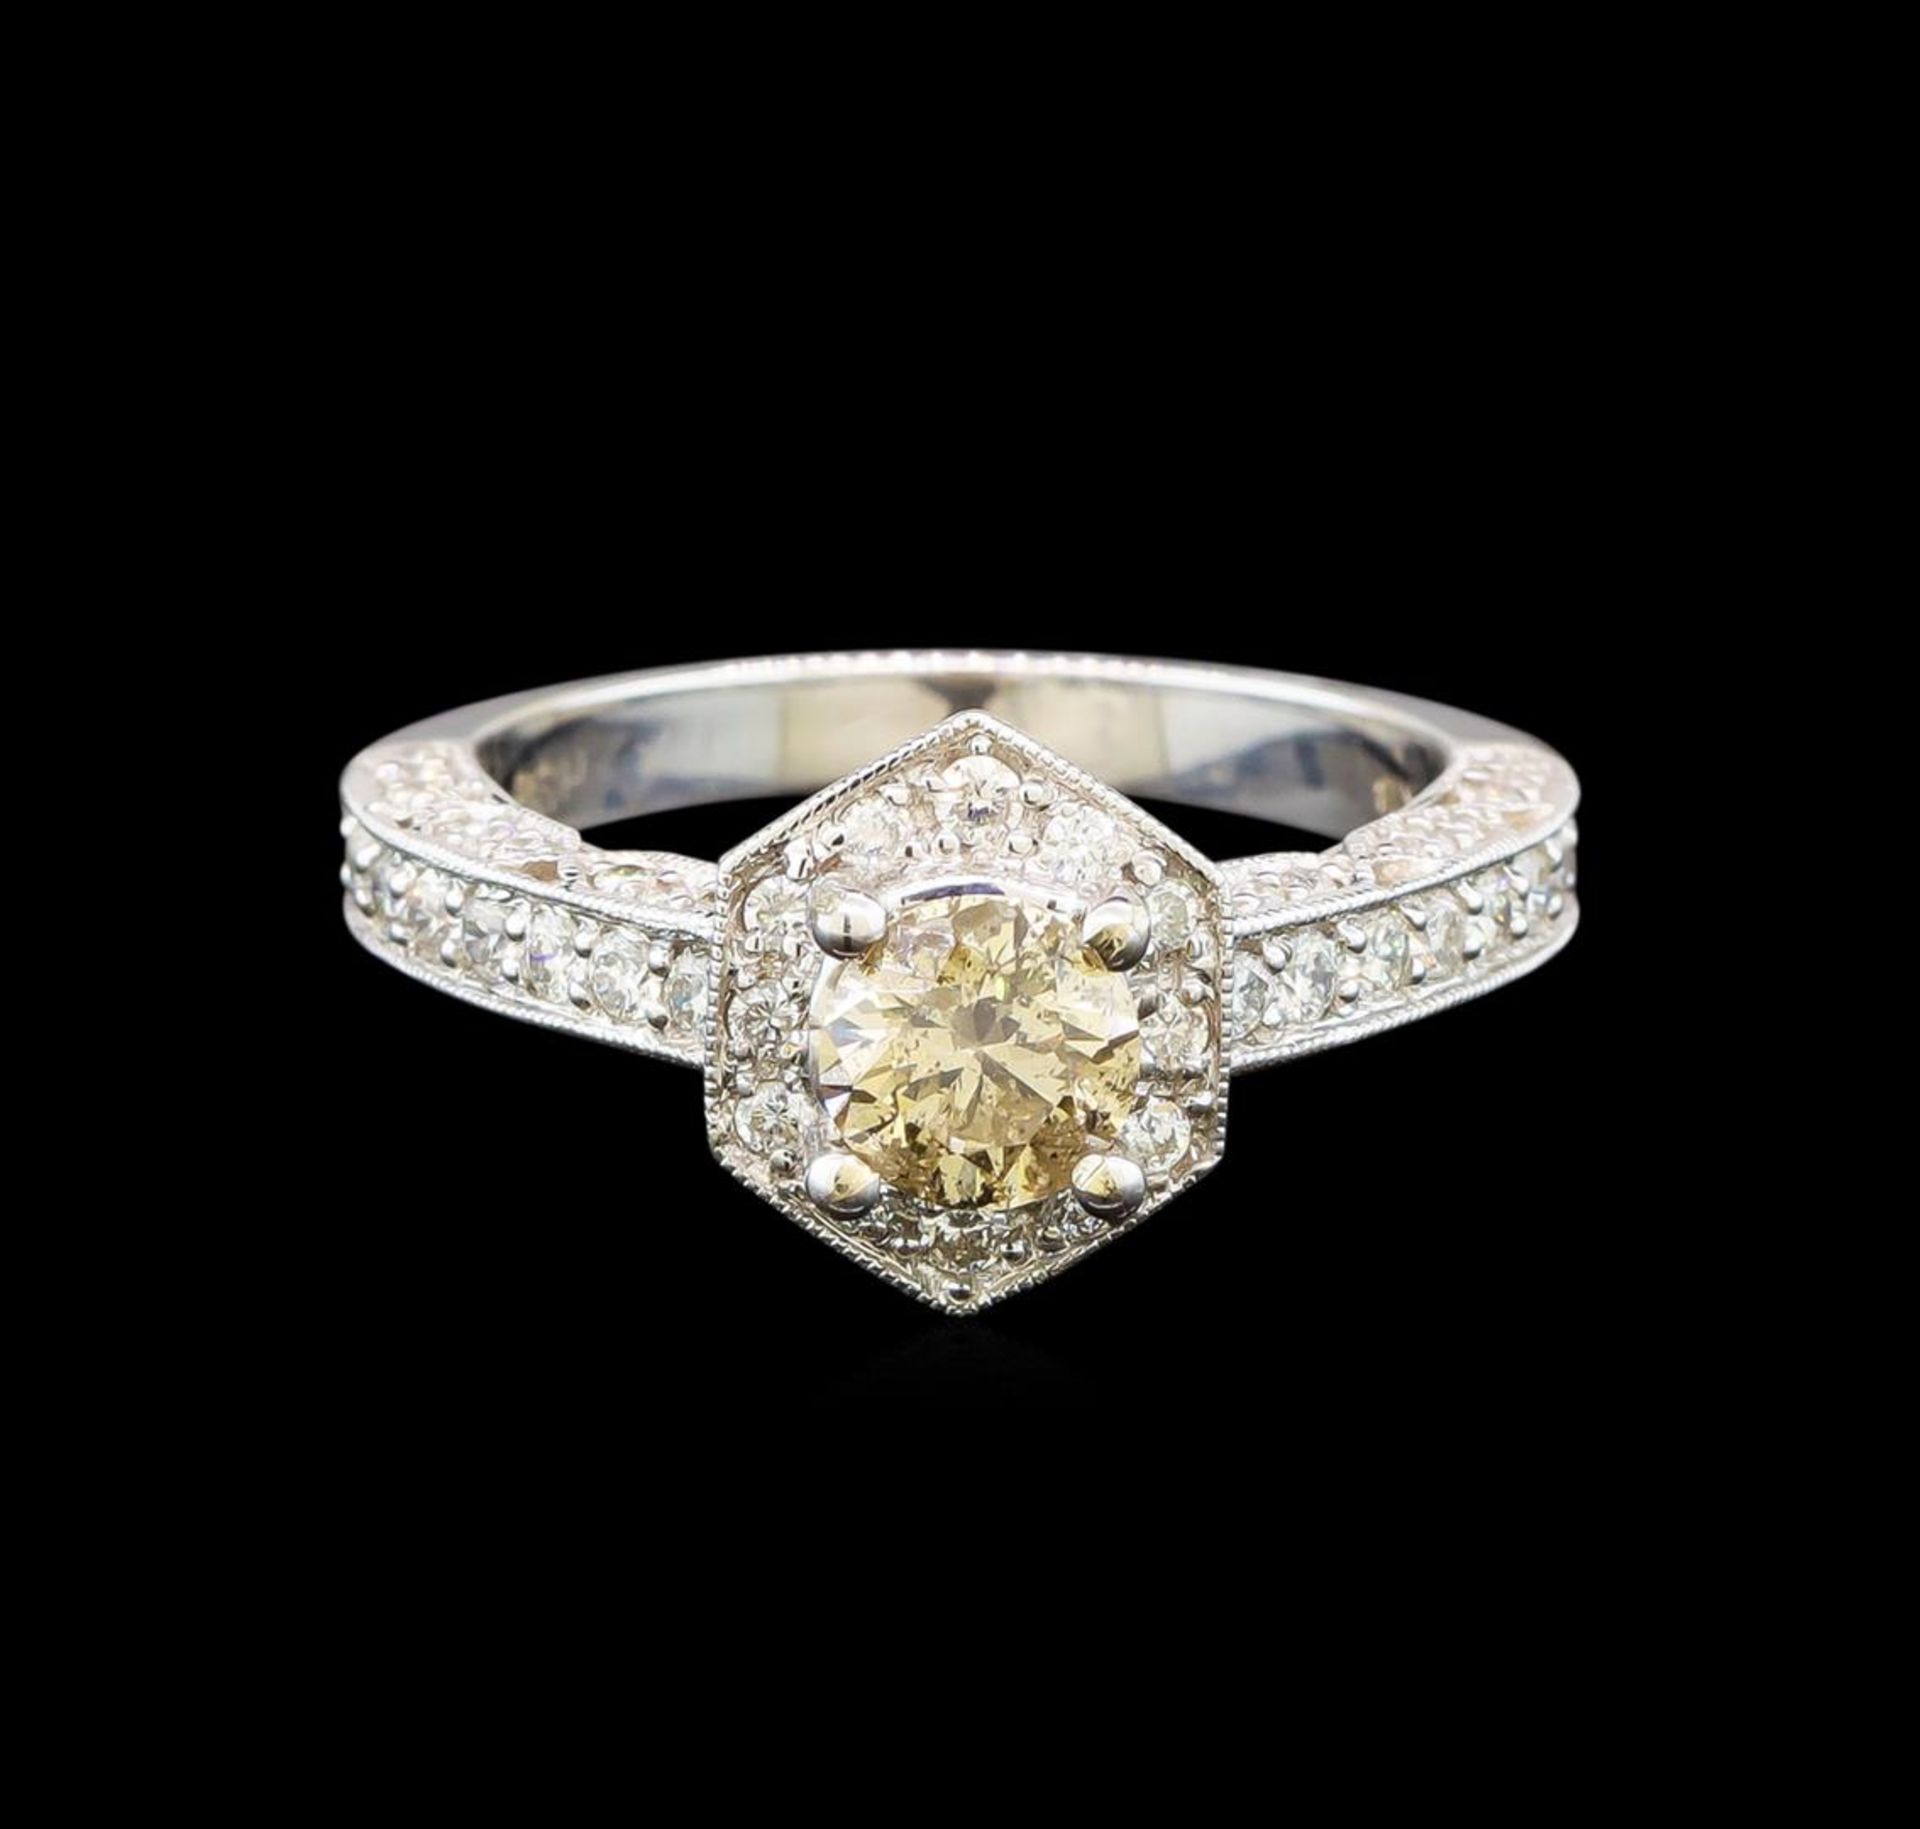 18KT White Gold 1.45 ctw Diamond Ring - Image 2 of 5